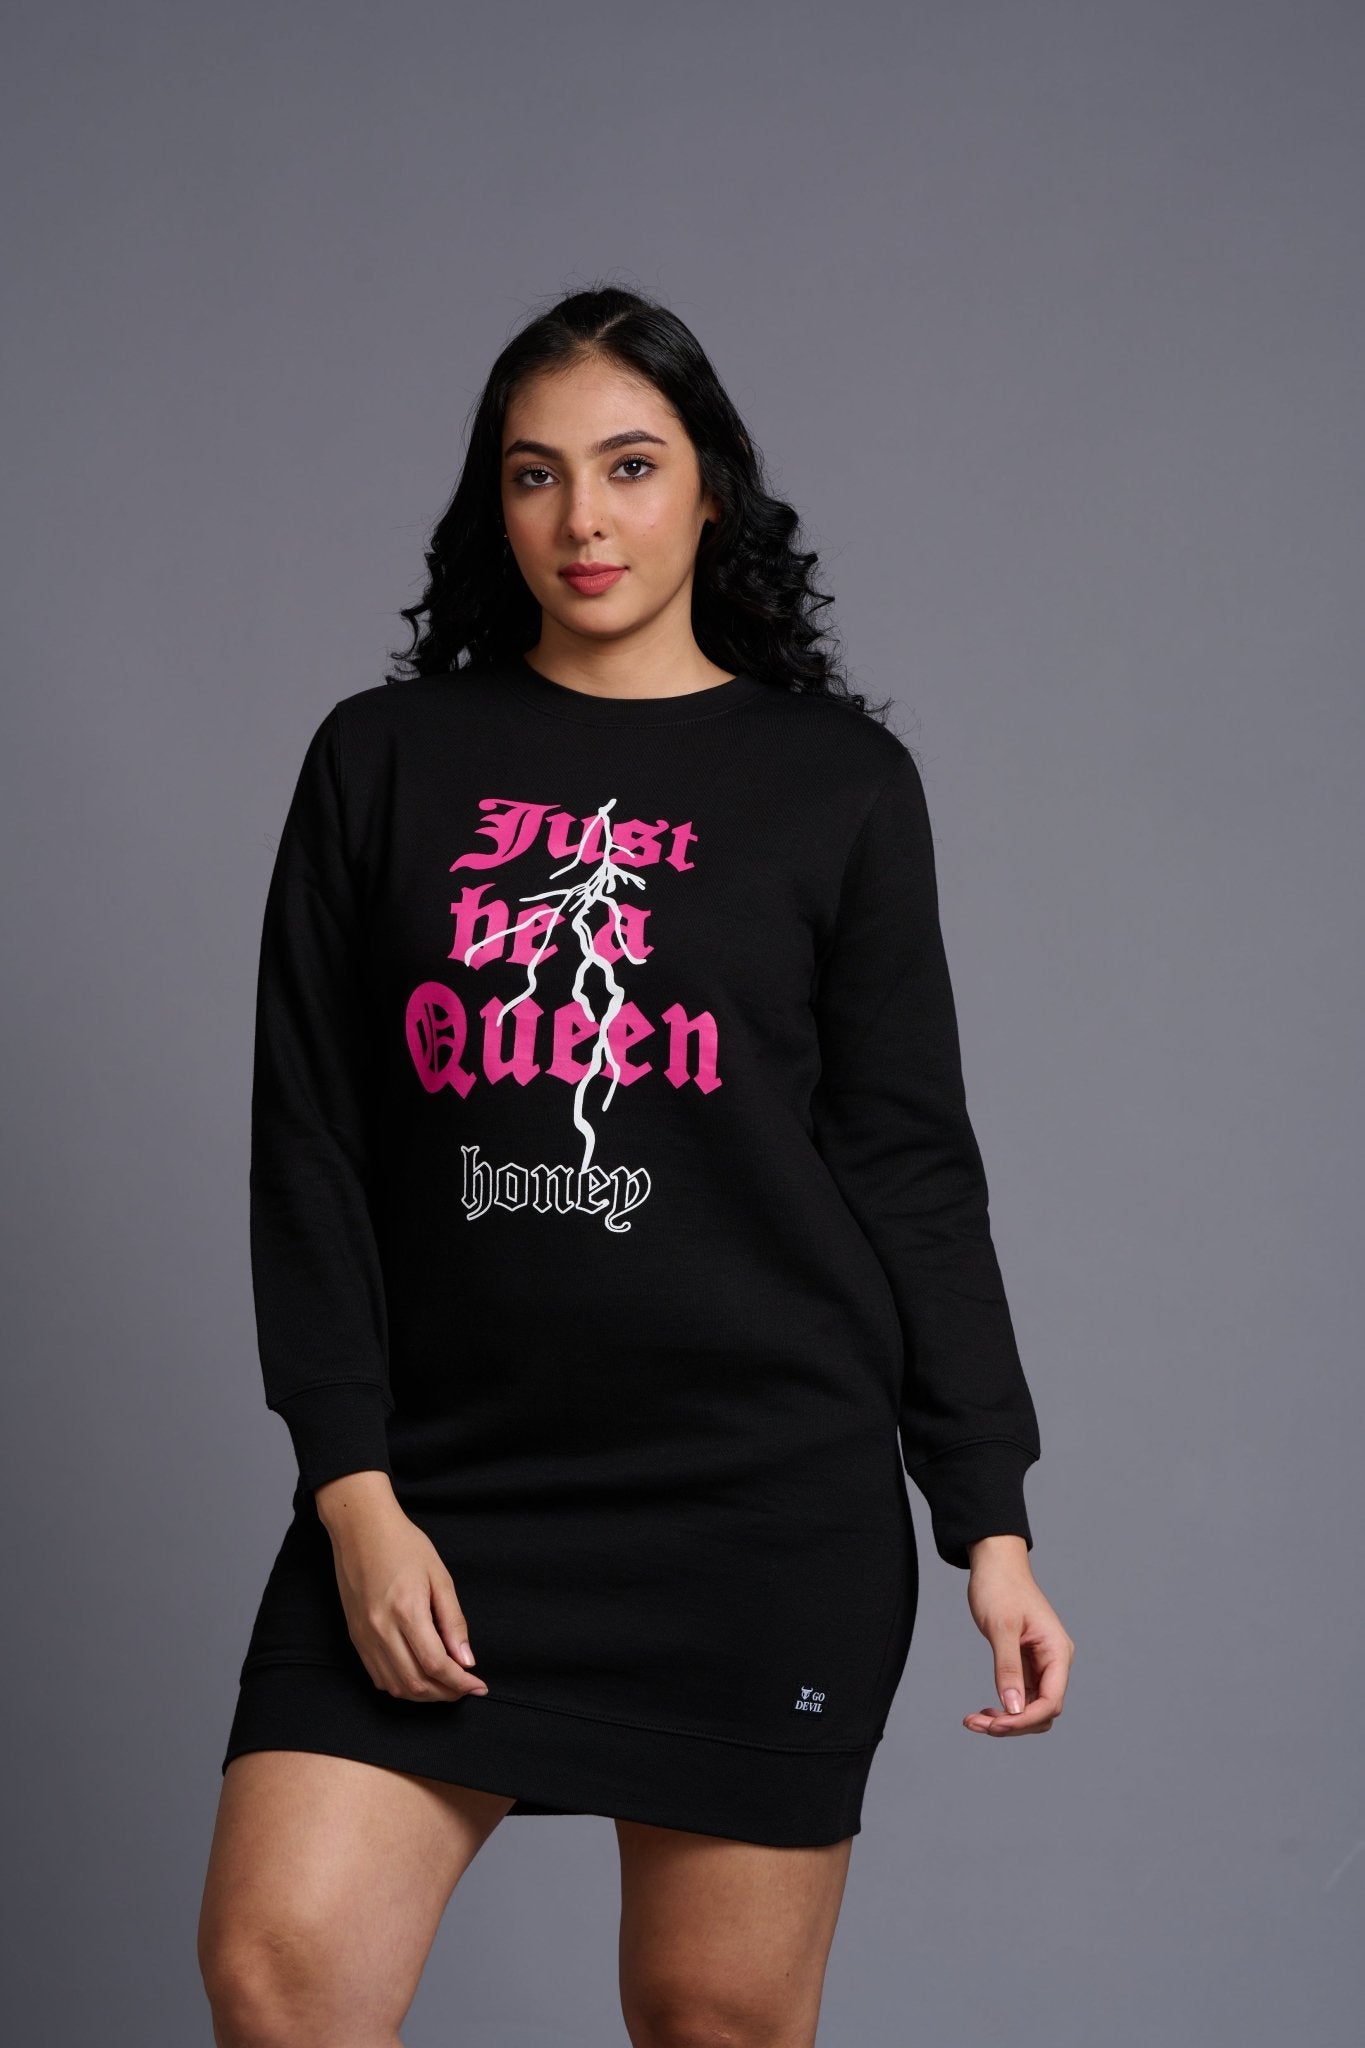 I m Queen Printed Black Sweatdress for Women - Go Devil